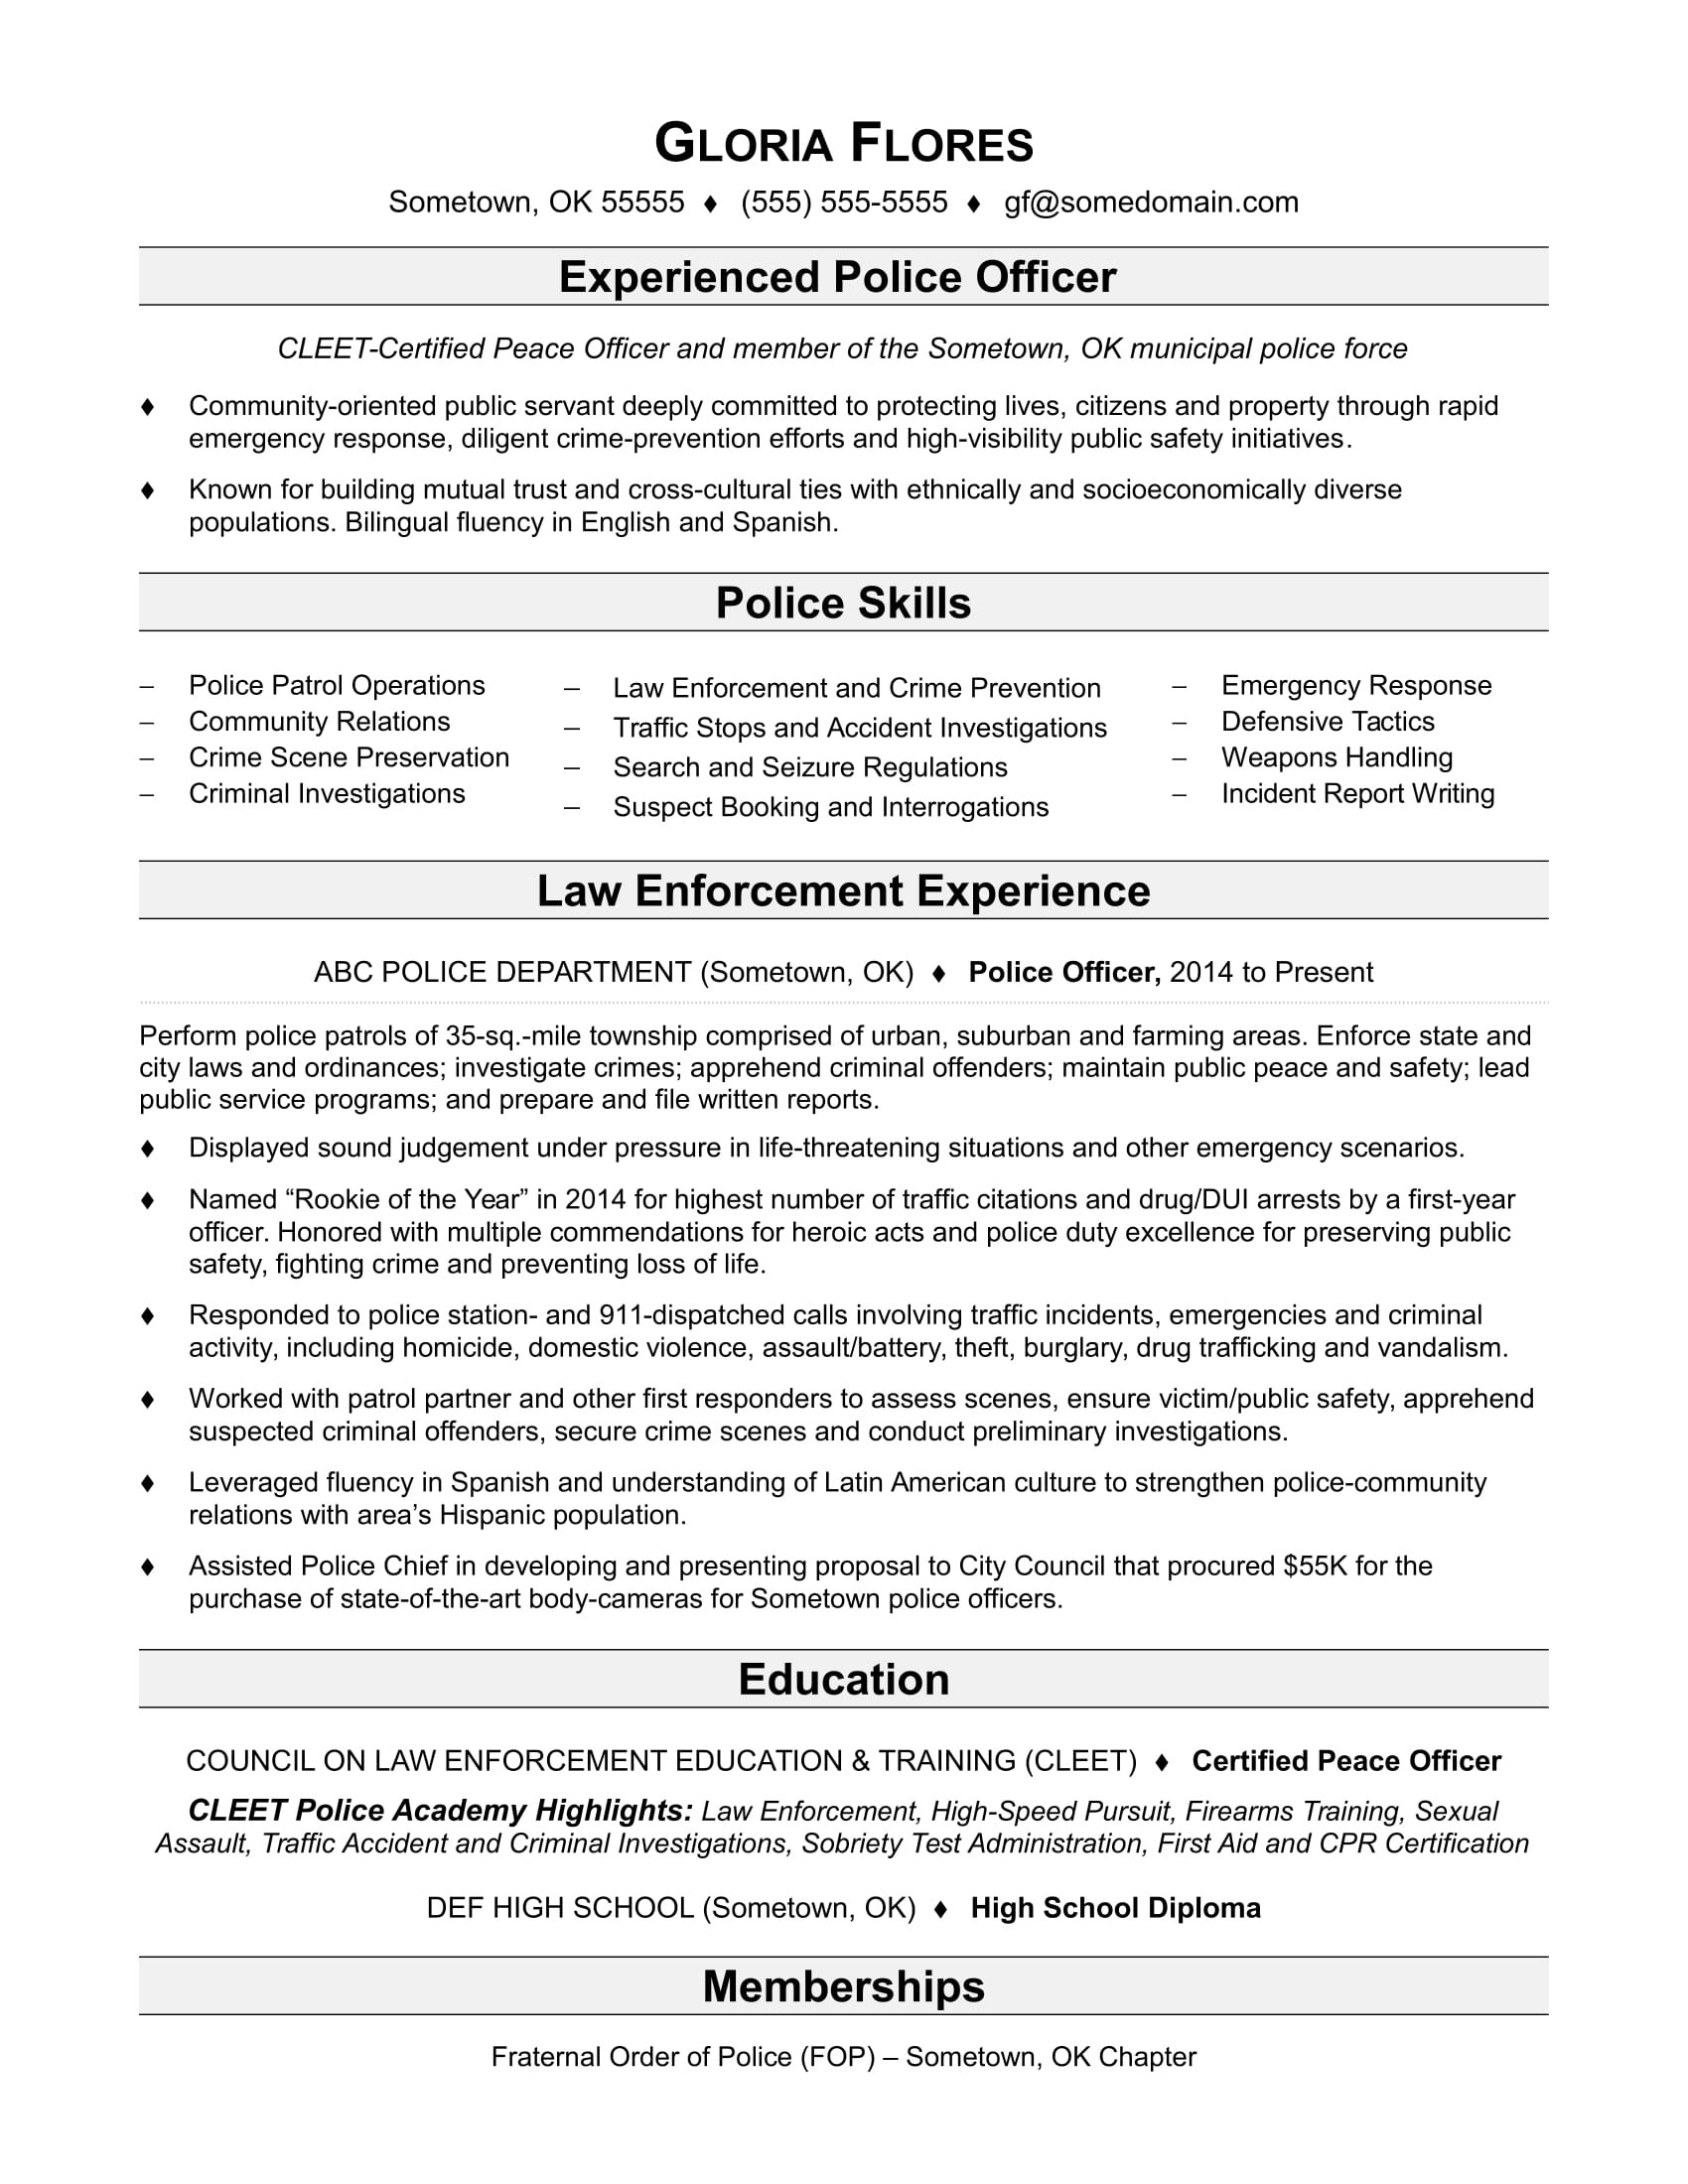 Sample Resumes for Retireing Police Officers Police Officer Resume Sample Monster.com